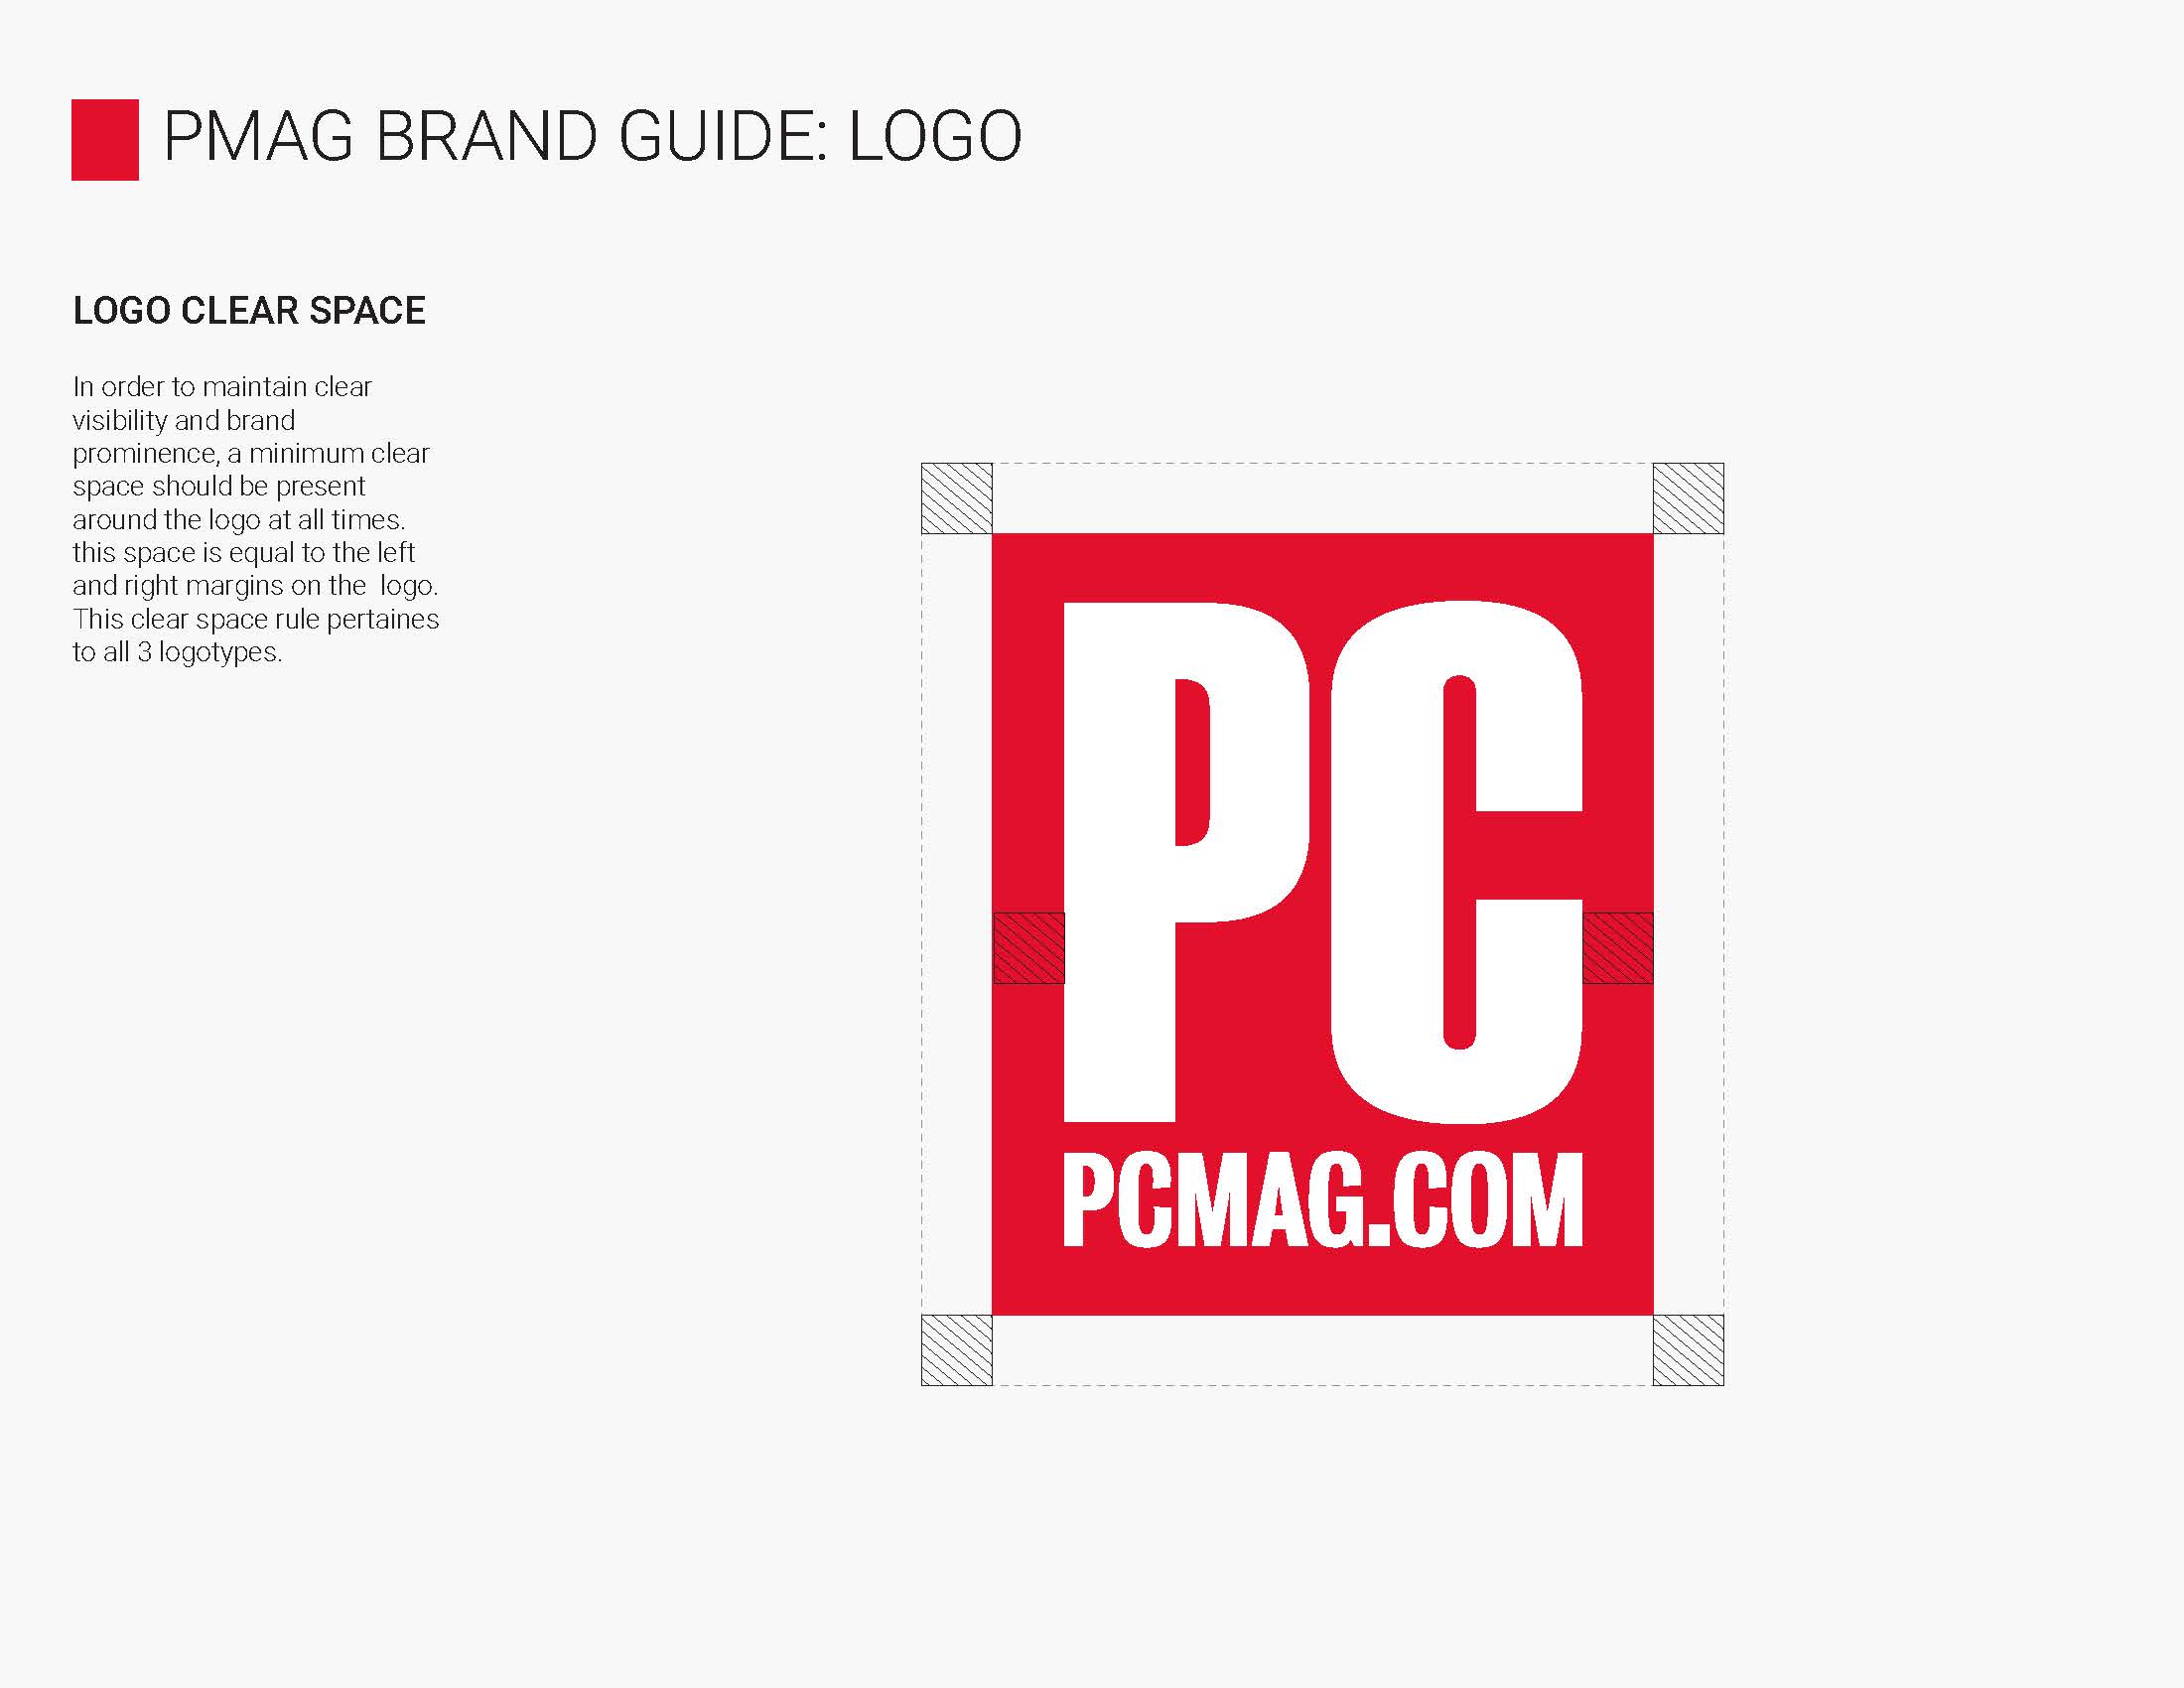 PCMag Logo - ART DIRECTION DESIGN